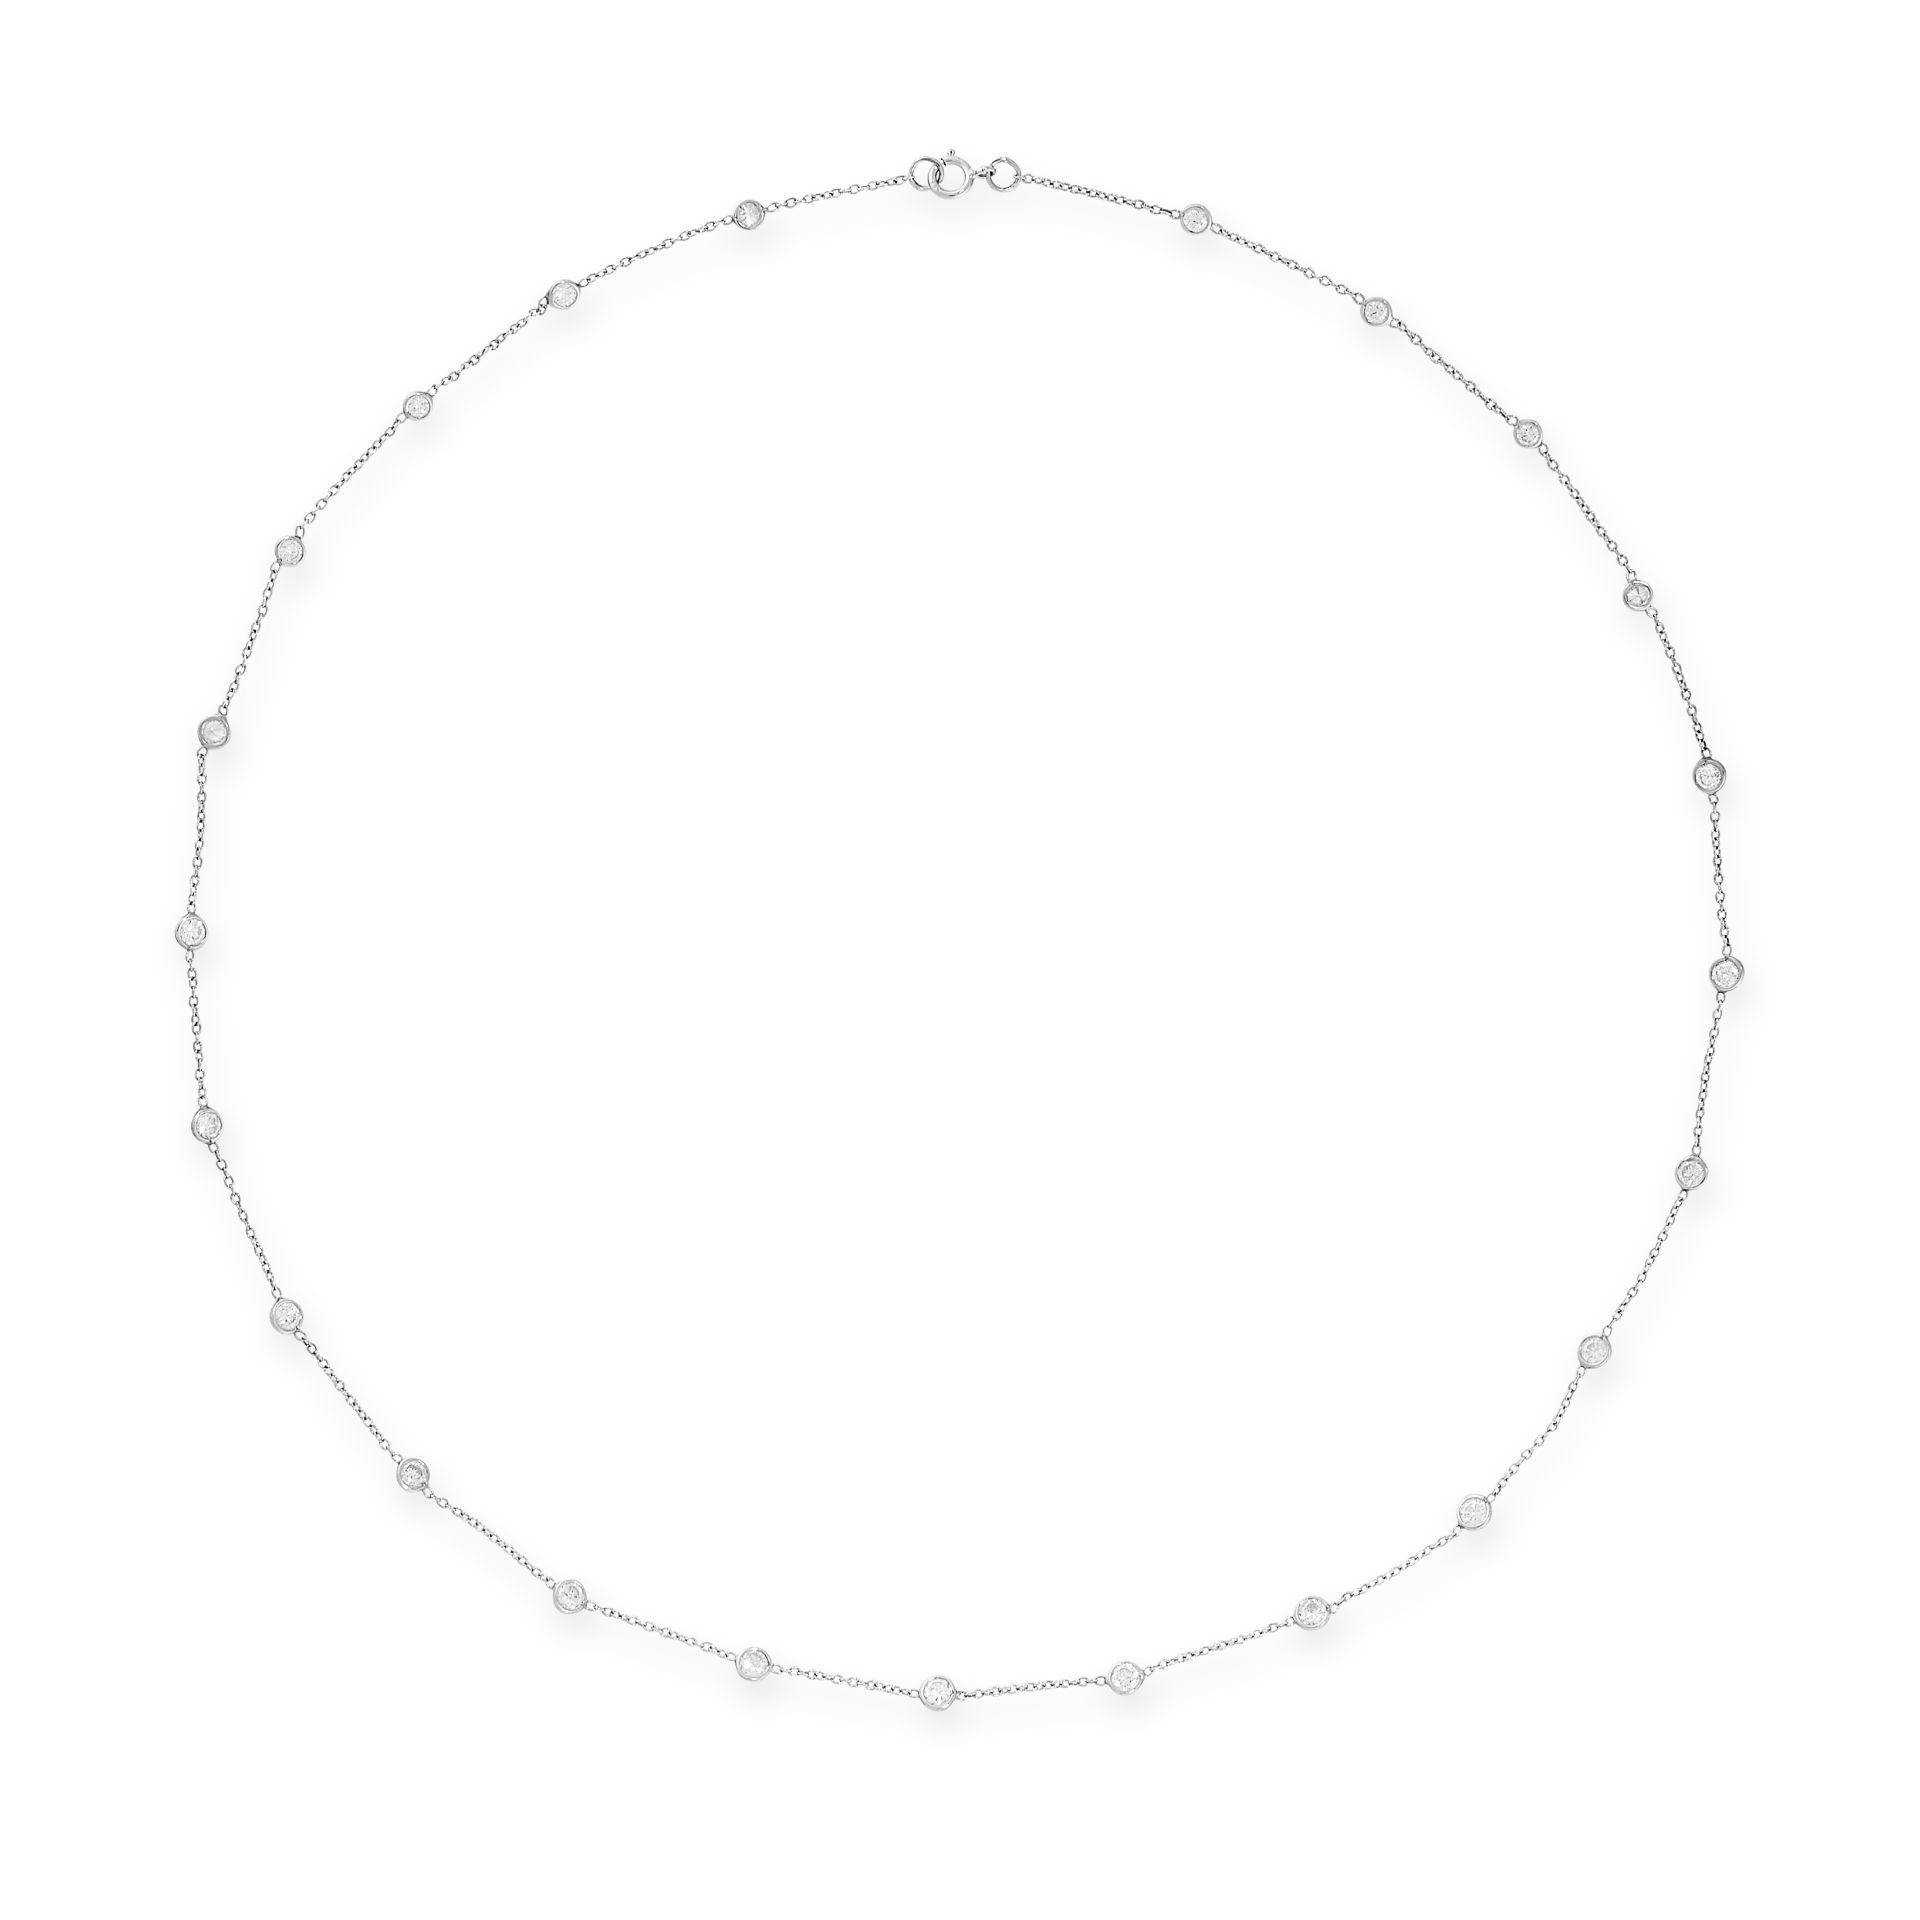 A DIAMOND NECKLACE the belcher link chain punctuated by twenty-three bezel set round cut diamonds,